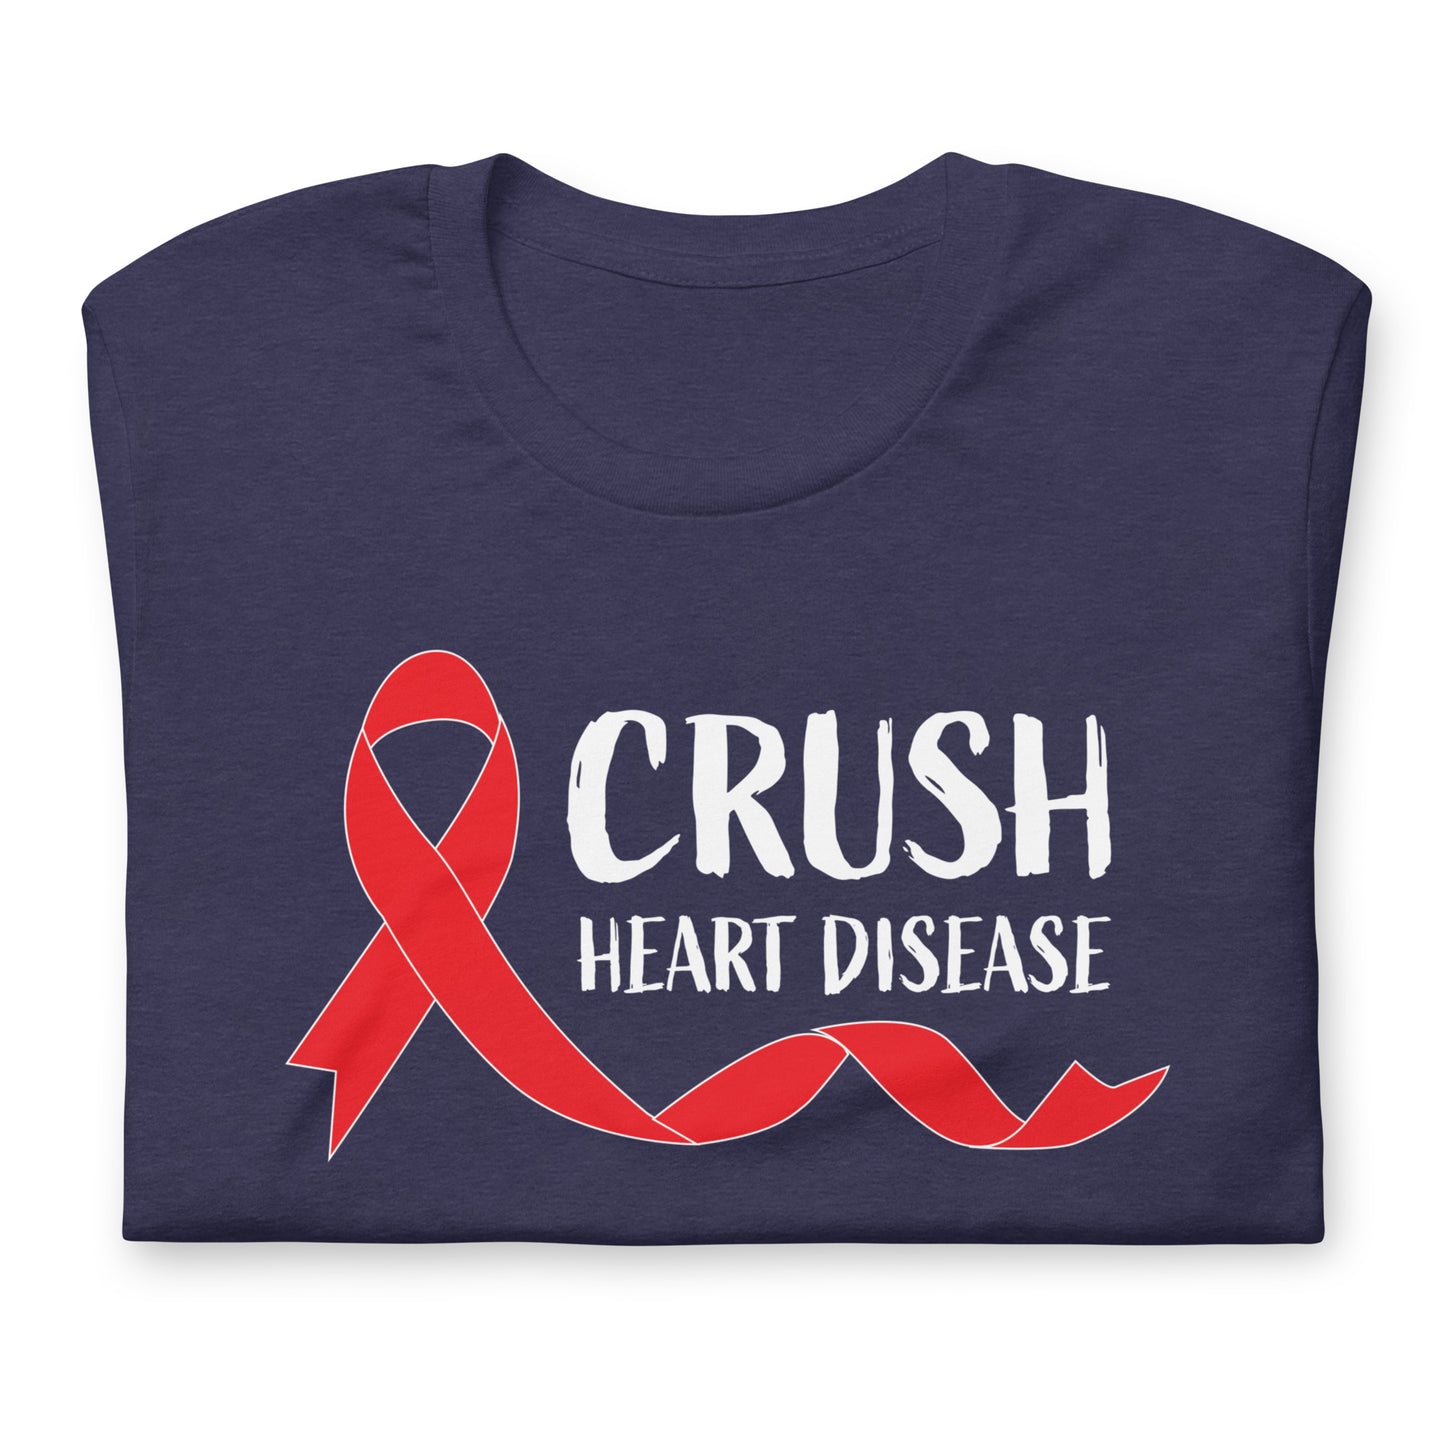 Crush Heart Disease Awareness Quality Cotton Bella Canvas Adult T-Shirt